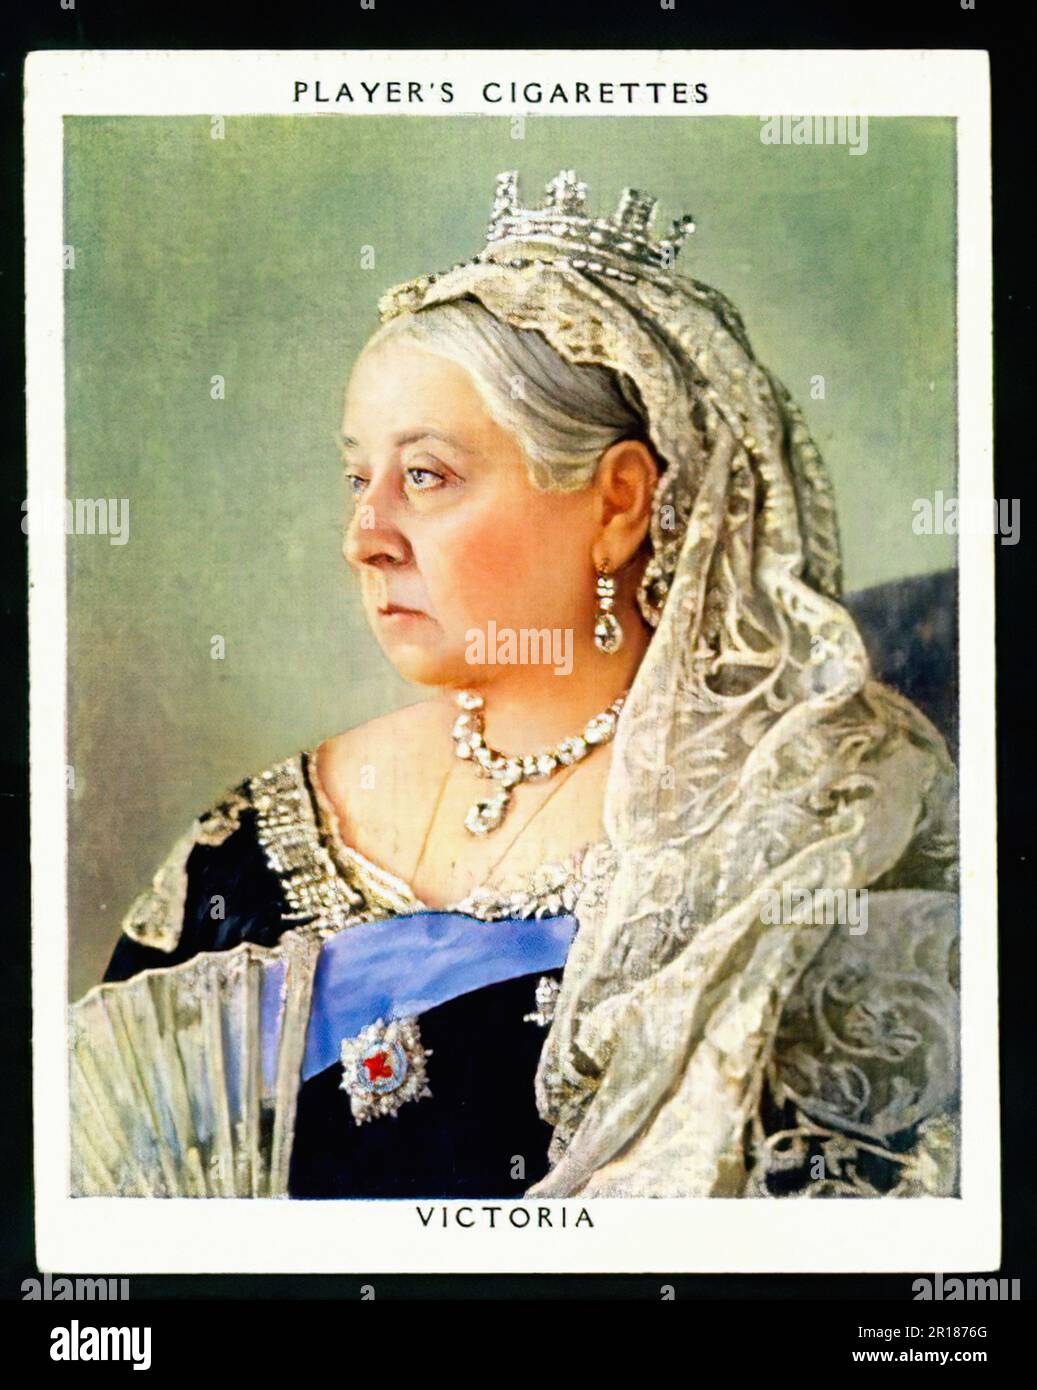 Queen Victoria - Vintage Cigarette Card 02 Stock Photo